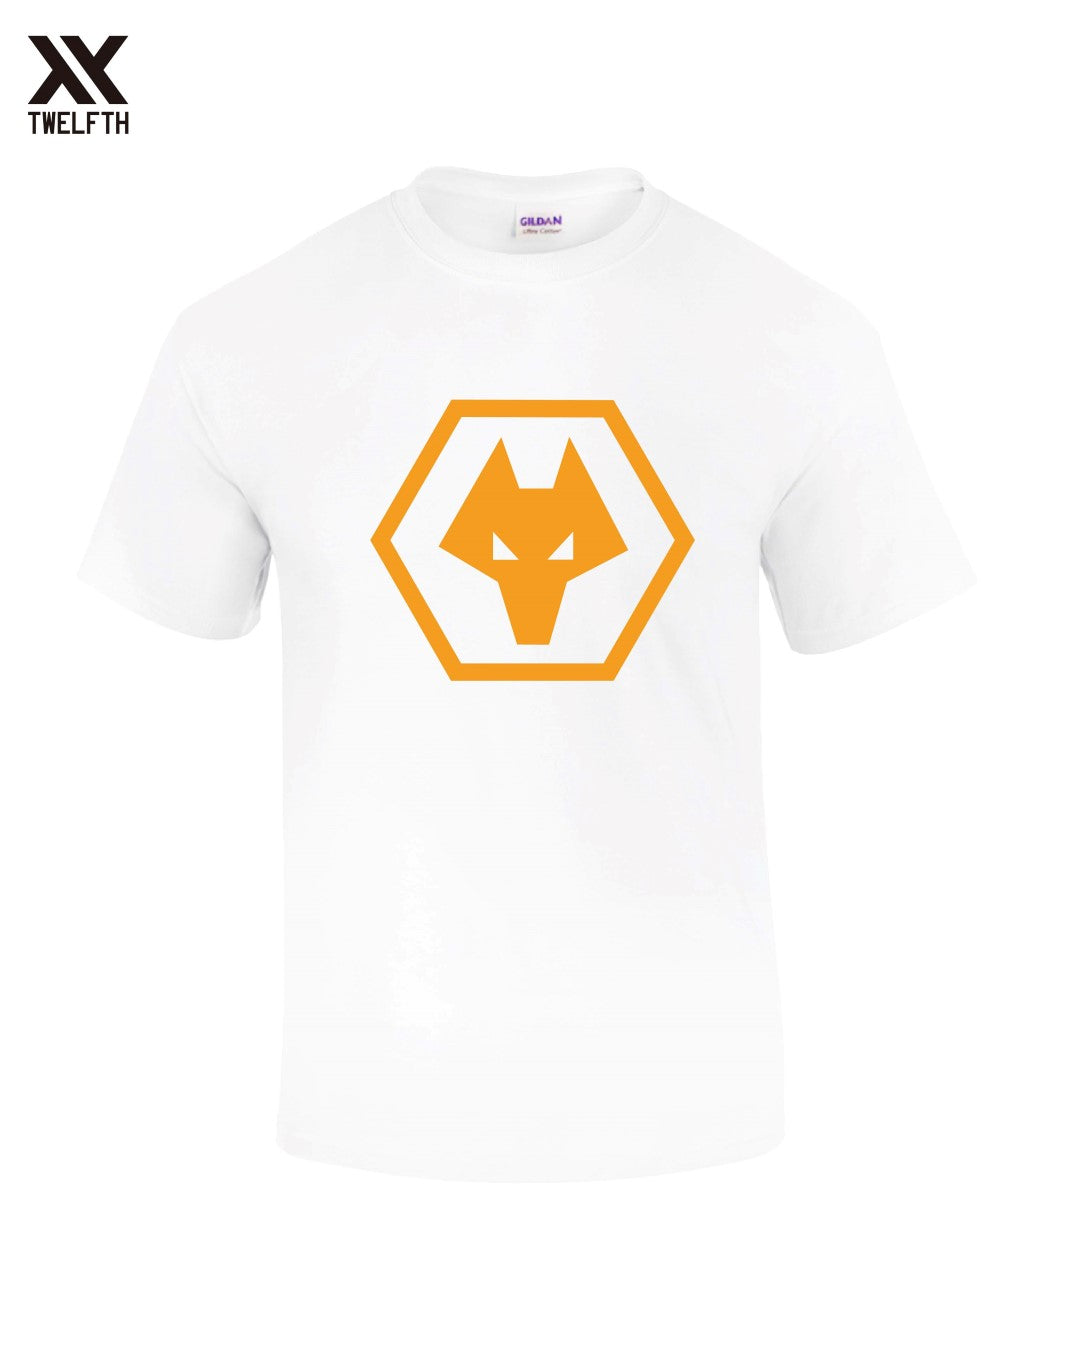 Wolves Crest T-Shirt - Mens